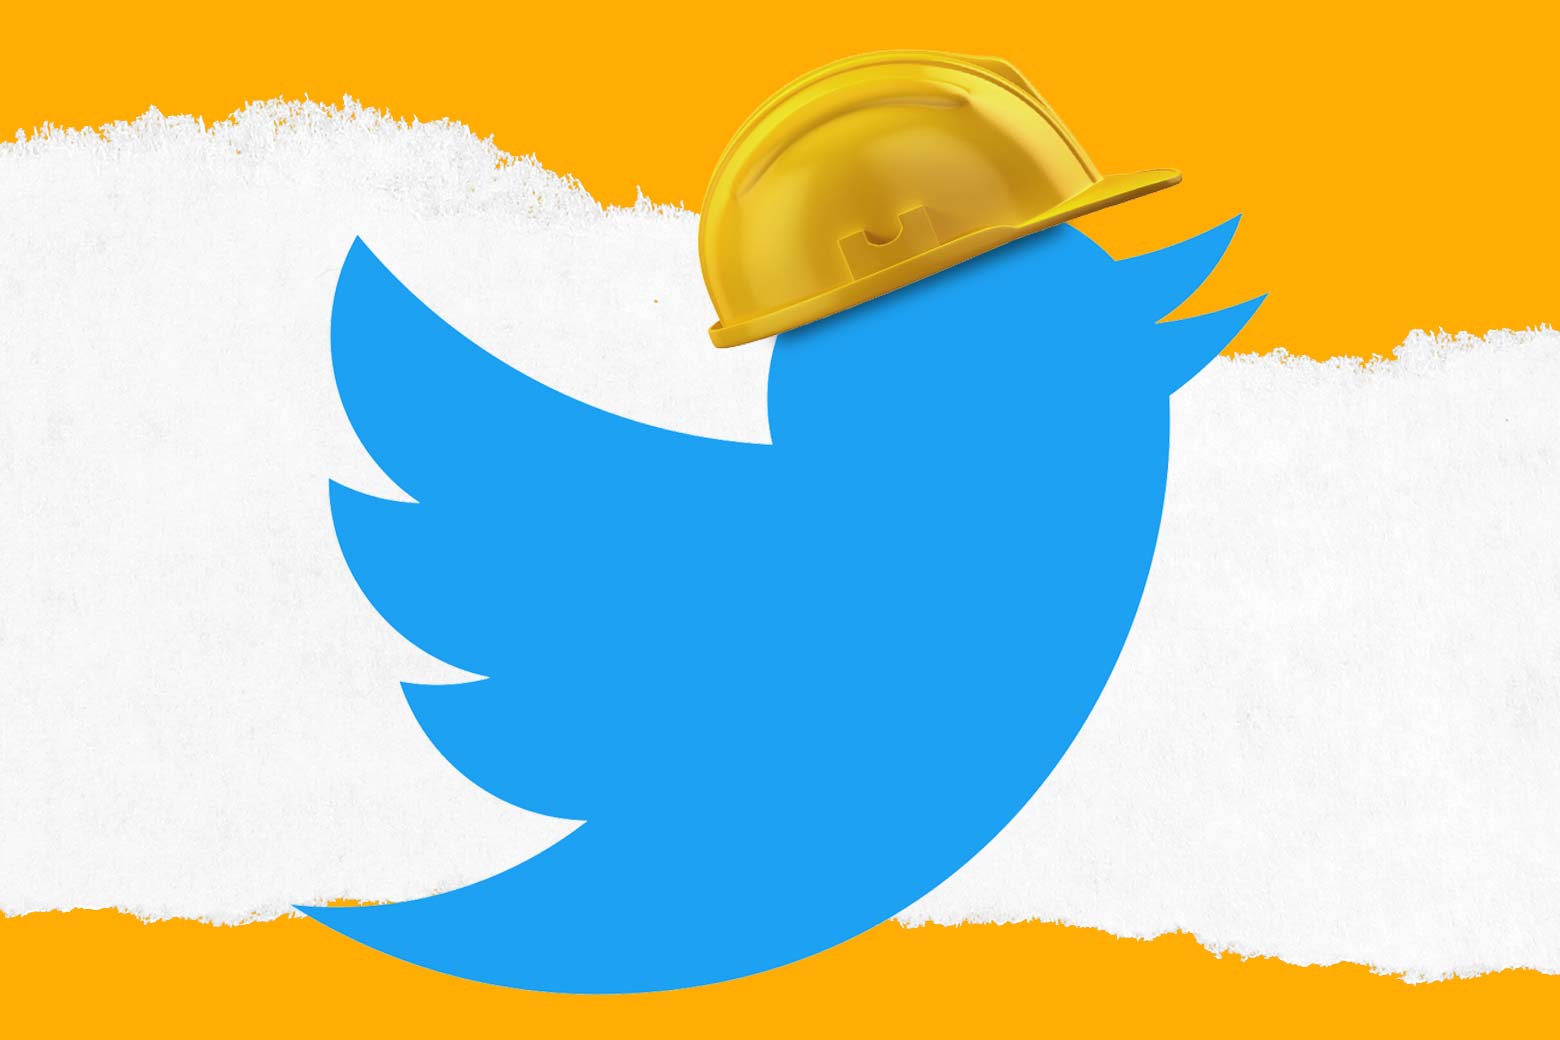 The Twitter bird wearing a construction hat